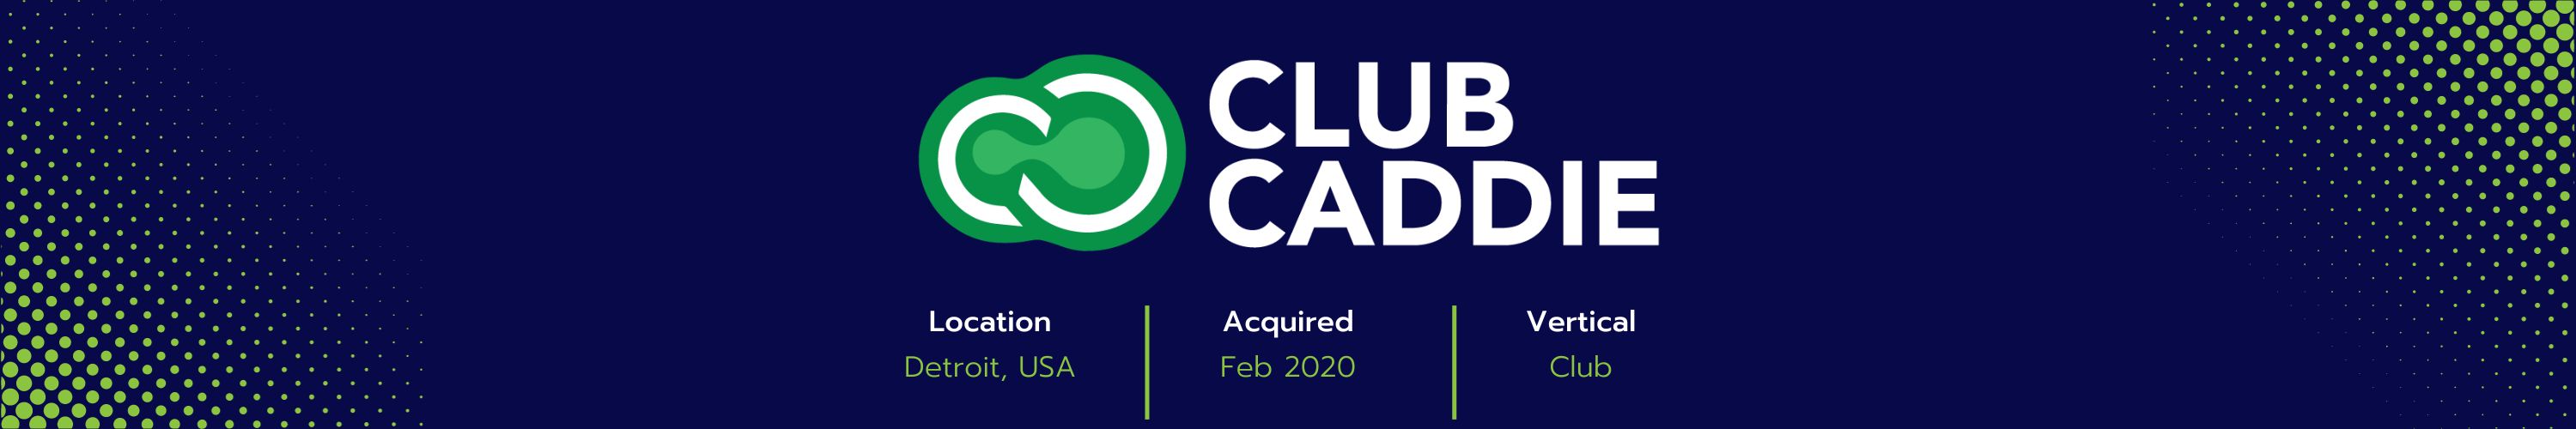 Club Caddie Banner